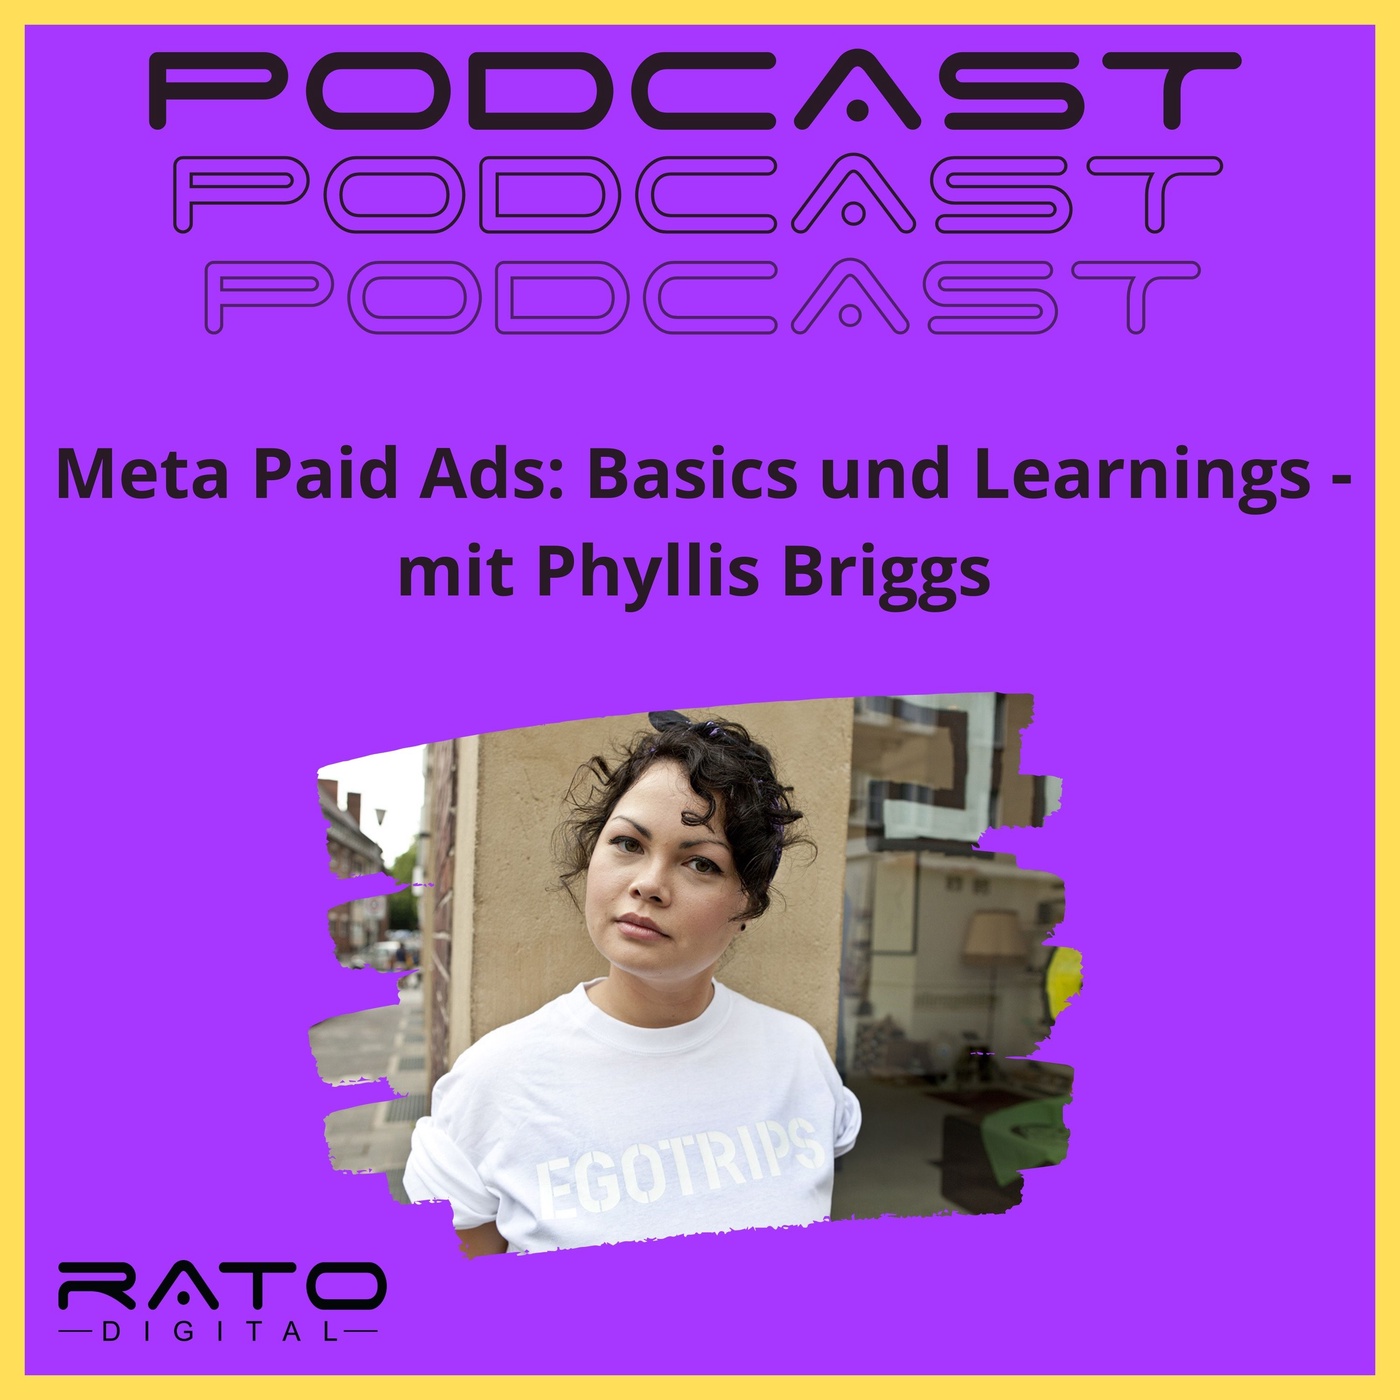 Meta Paid Ads: Basics und Learnings - mit Phyllis Briggs